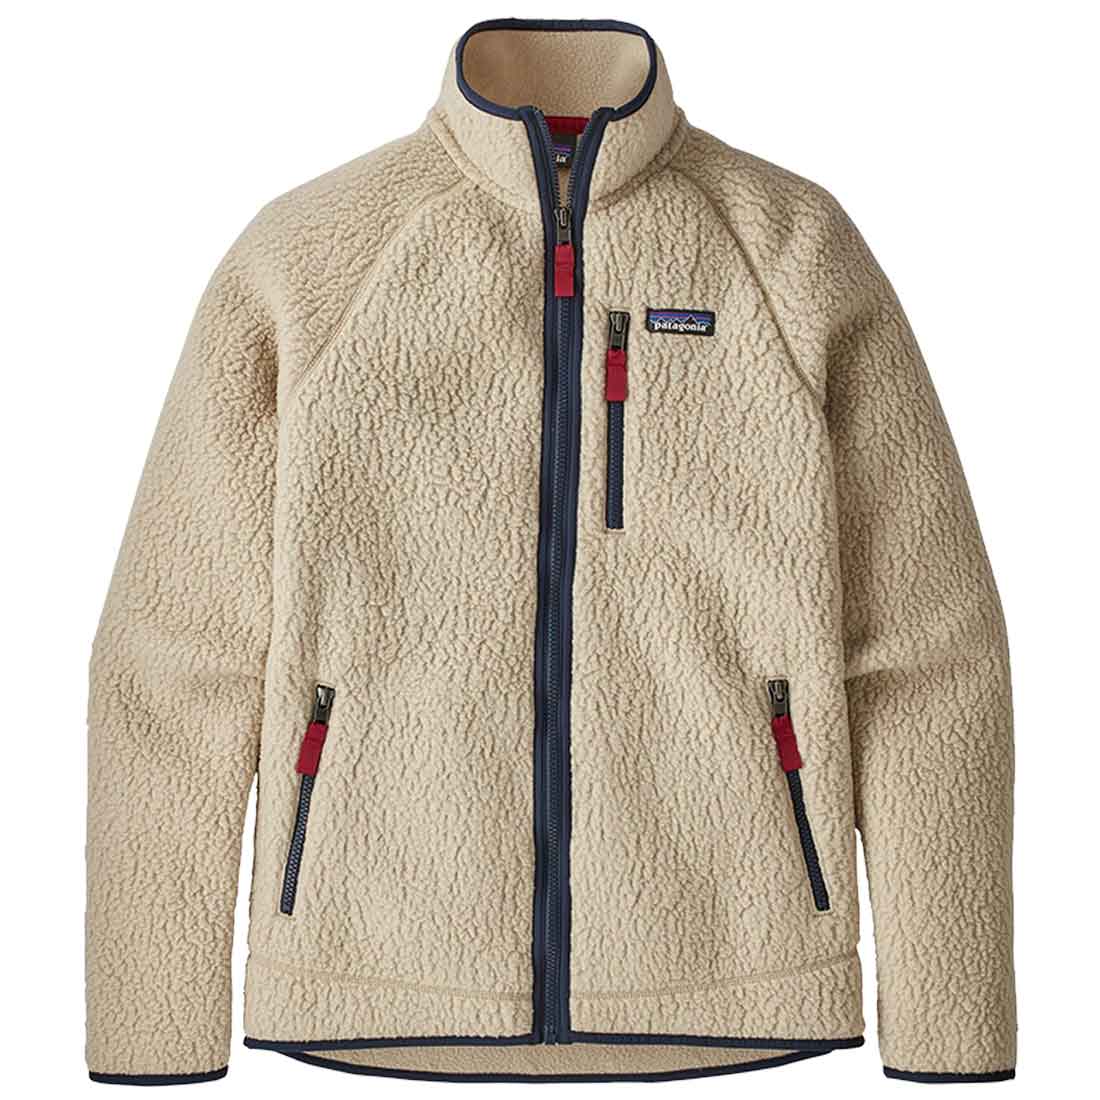 Patagonia Retro Pile Fleece Jacket - Men's